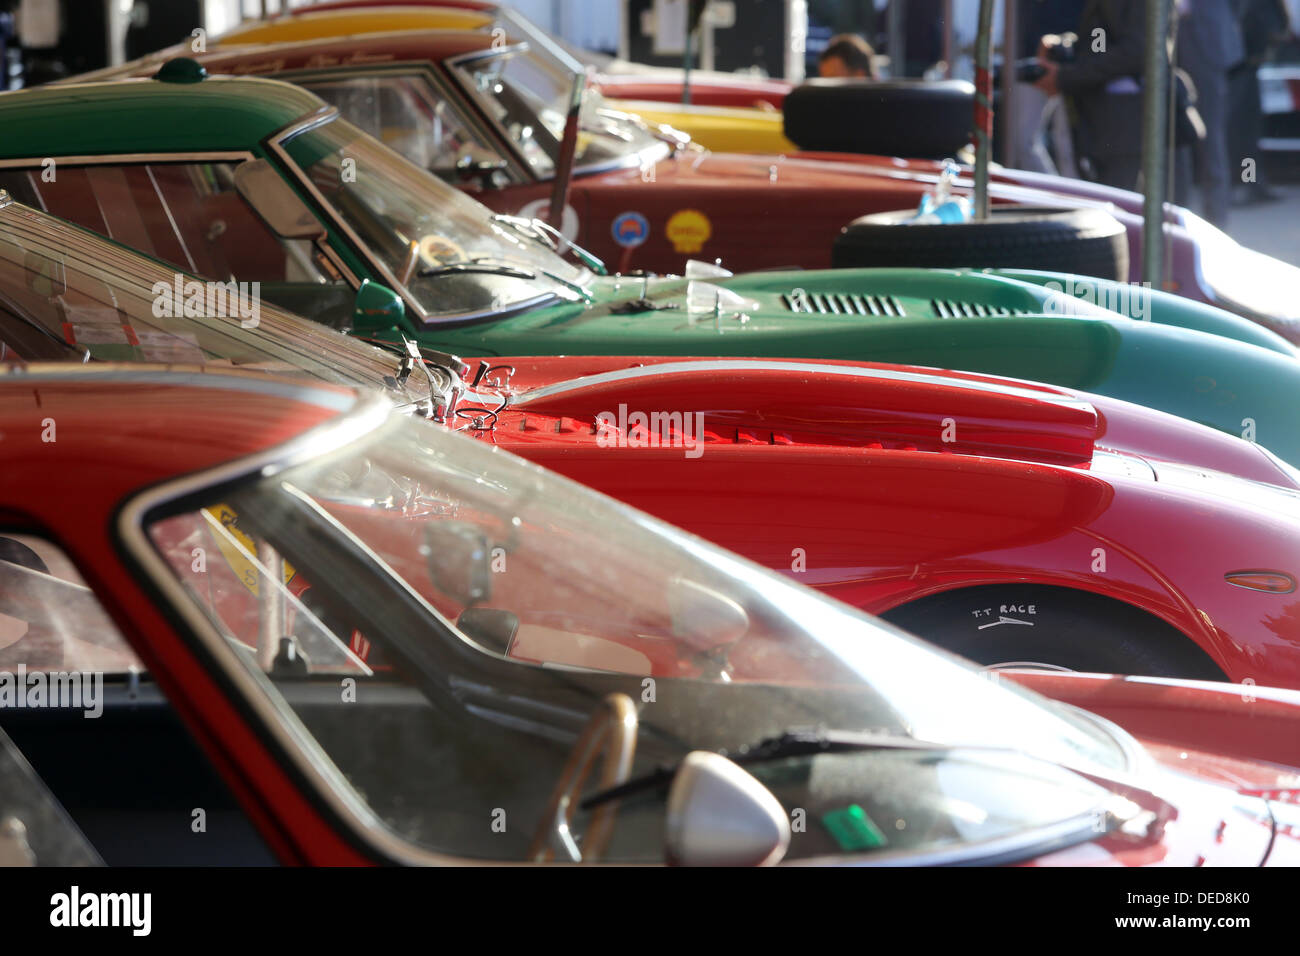 Chichester, UK. 15. September 2013. Goodwood Revival 2013 bei The Goodwood Motor Circuit - Foto zeigt Ferraris im Fahrerlager © Oliver Dixon/Alamy Live News Stockfoto